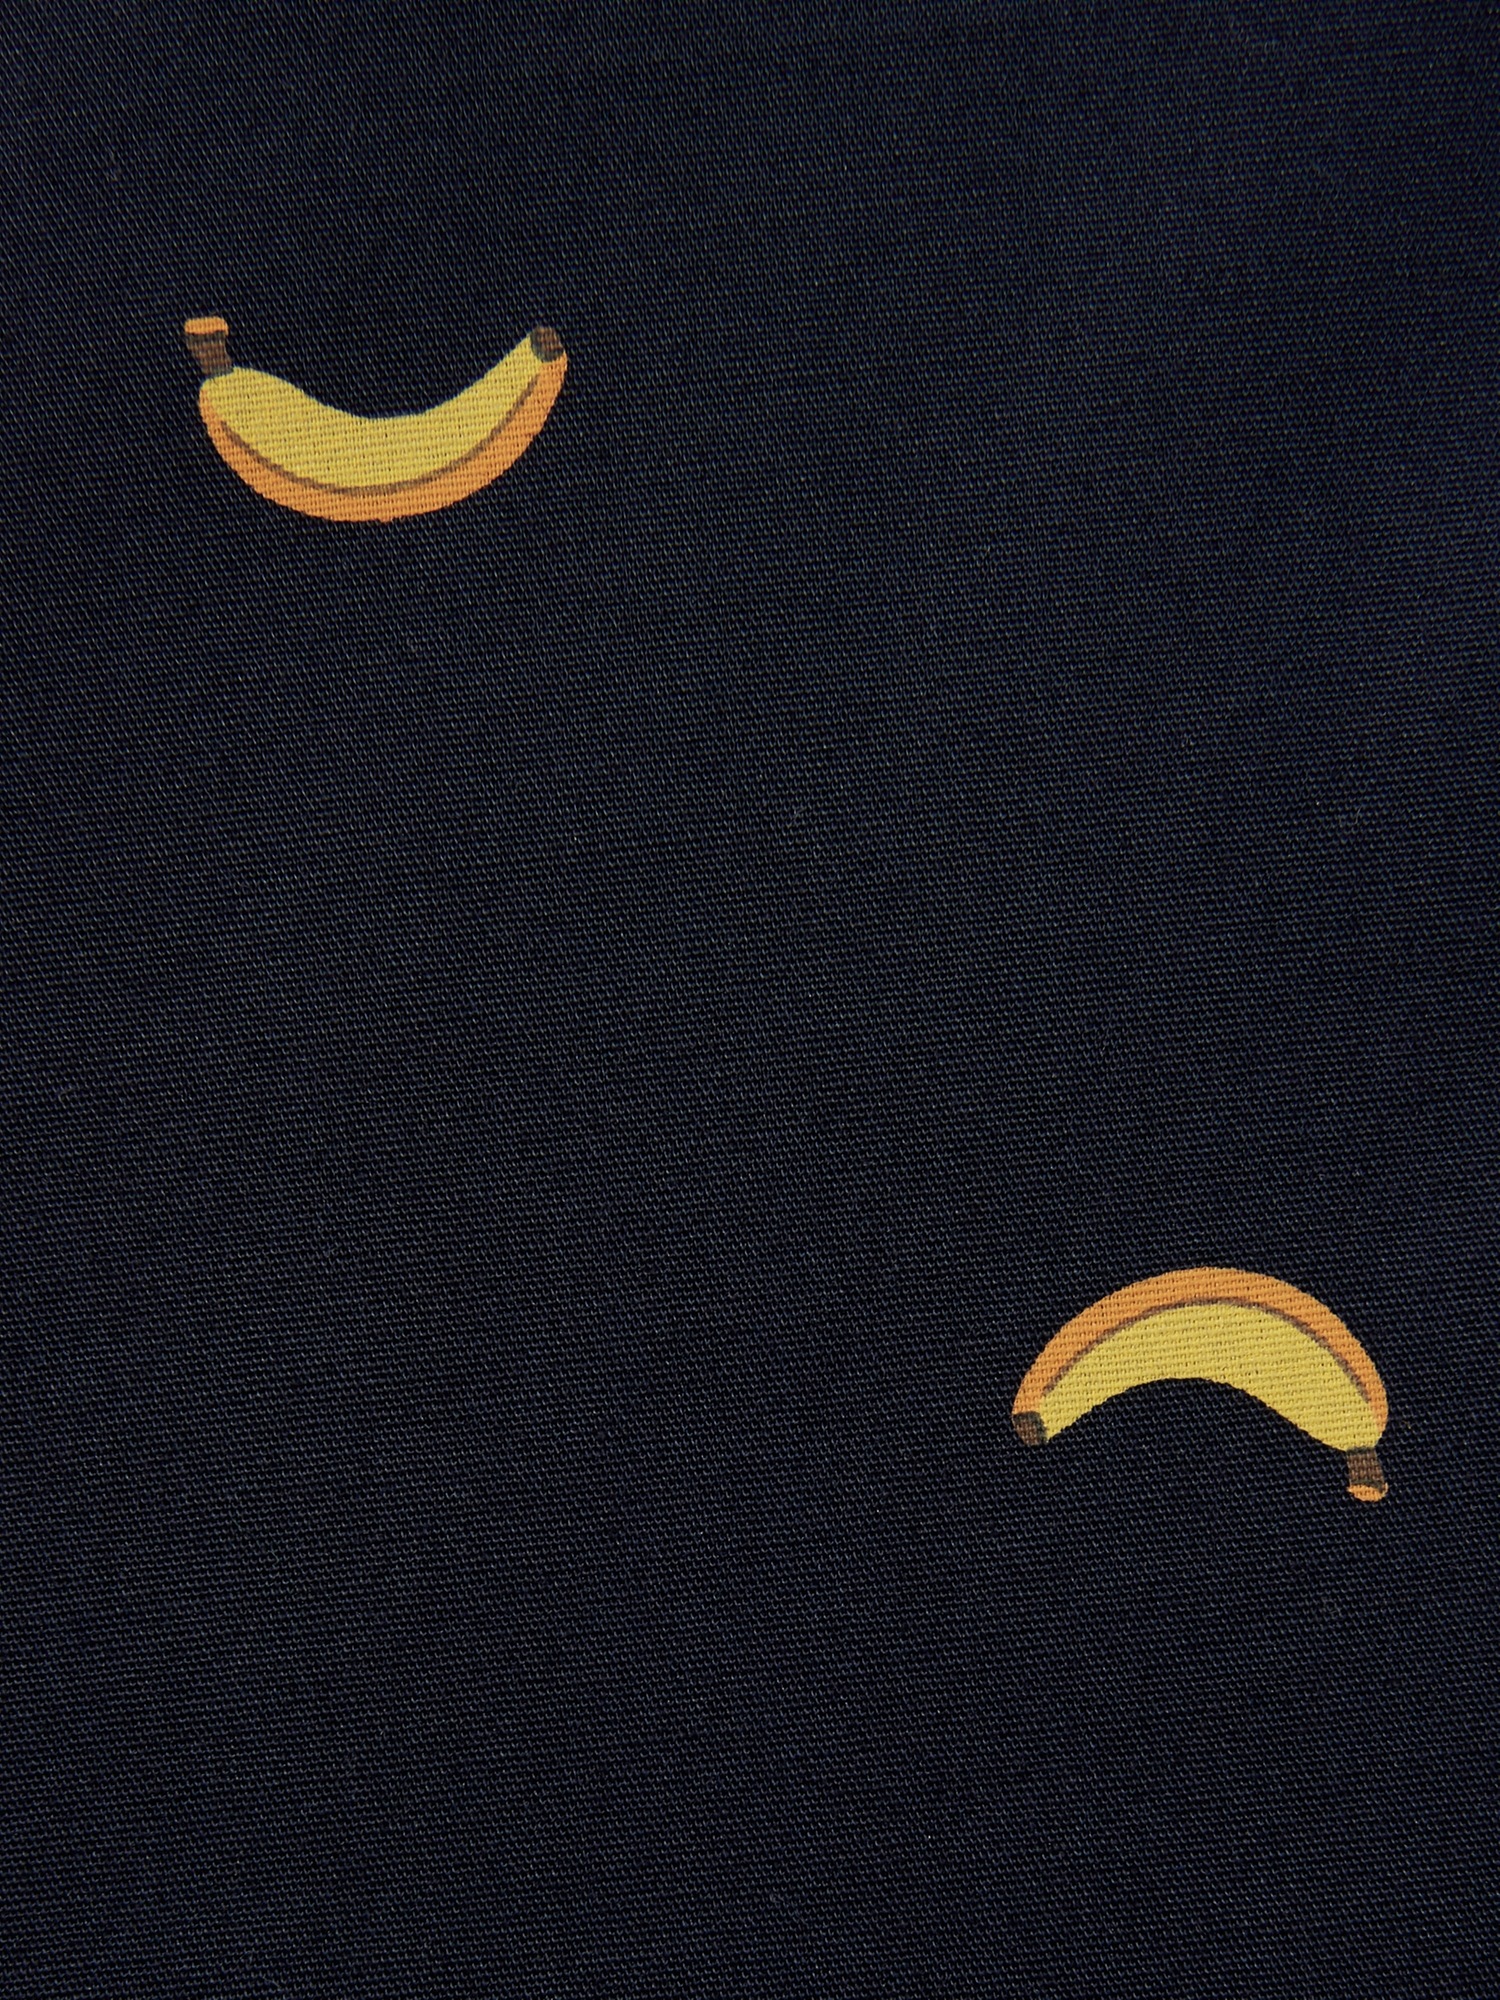 Banana Boxer